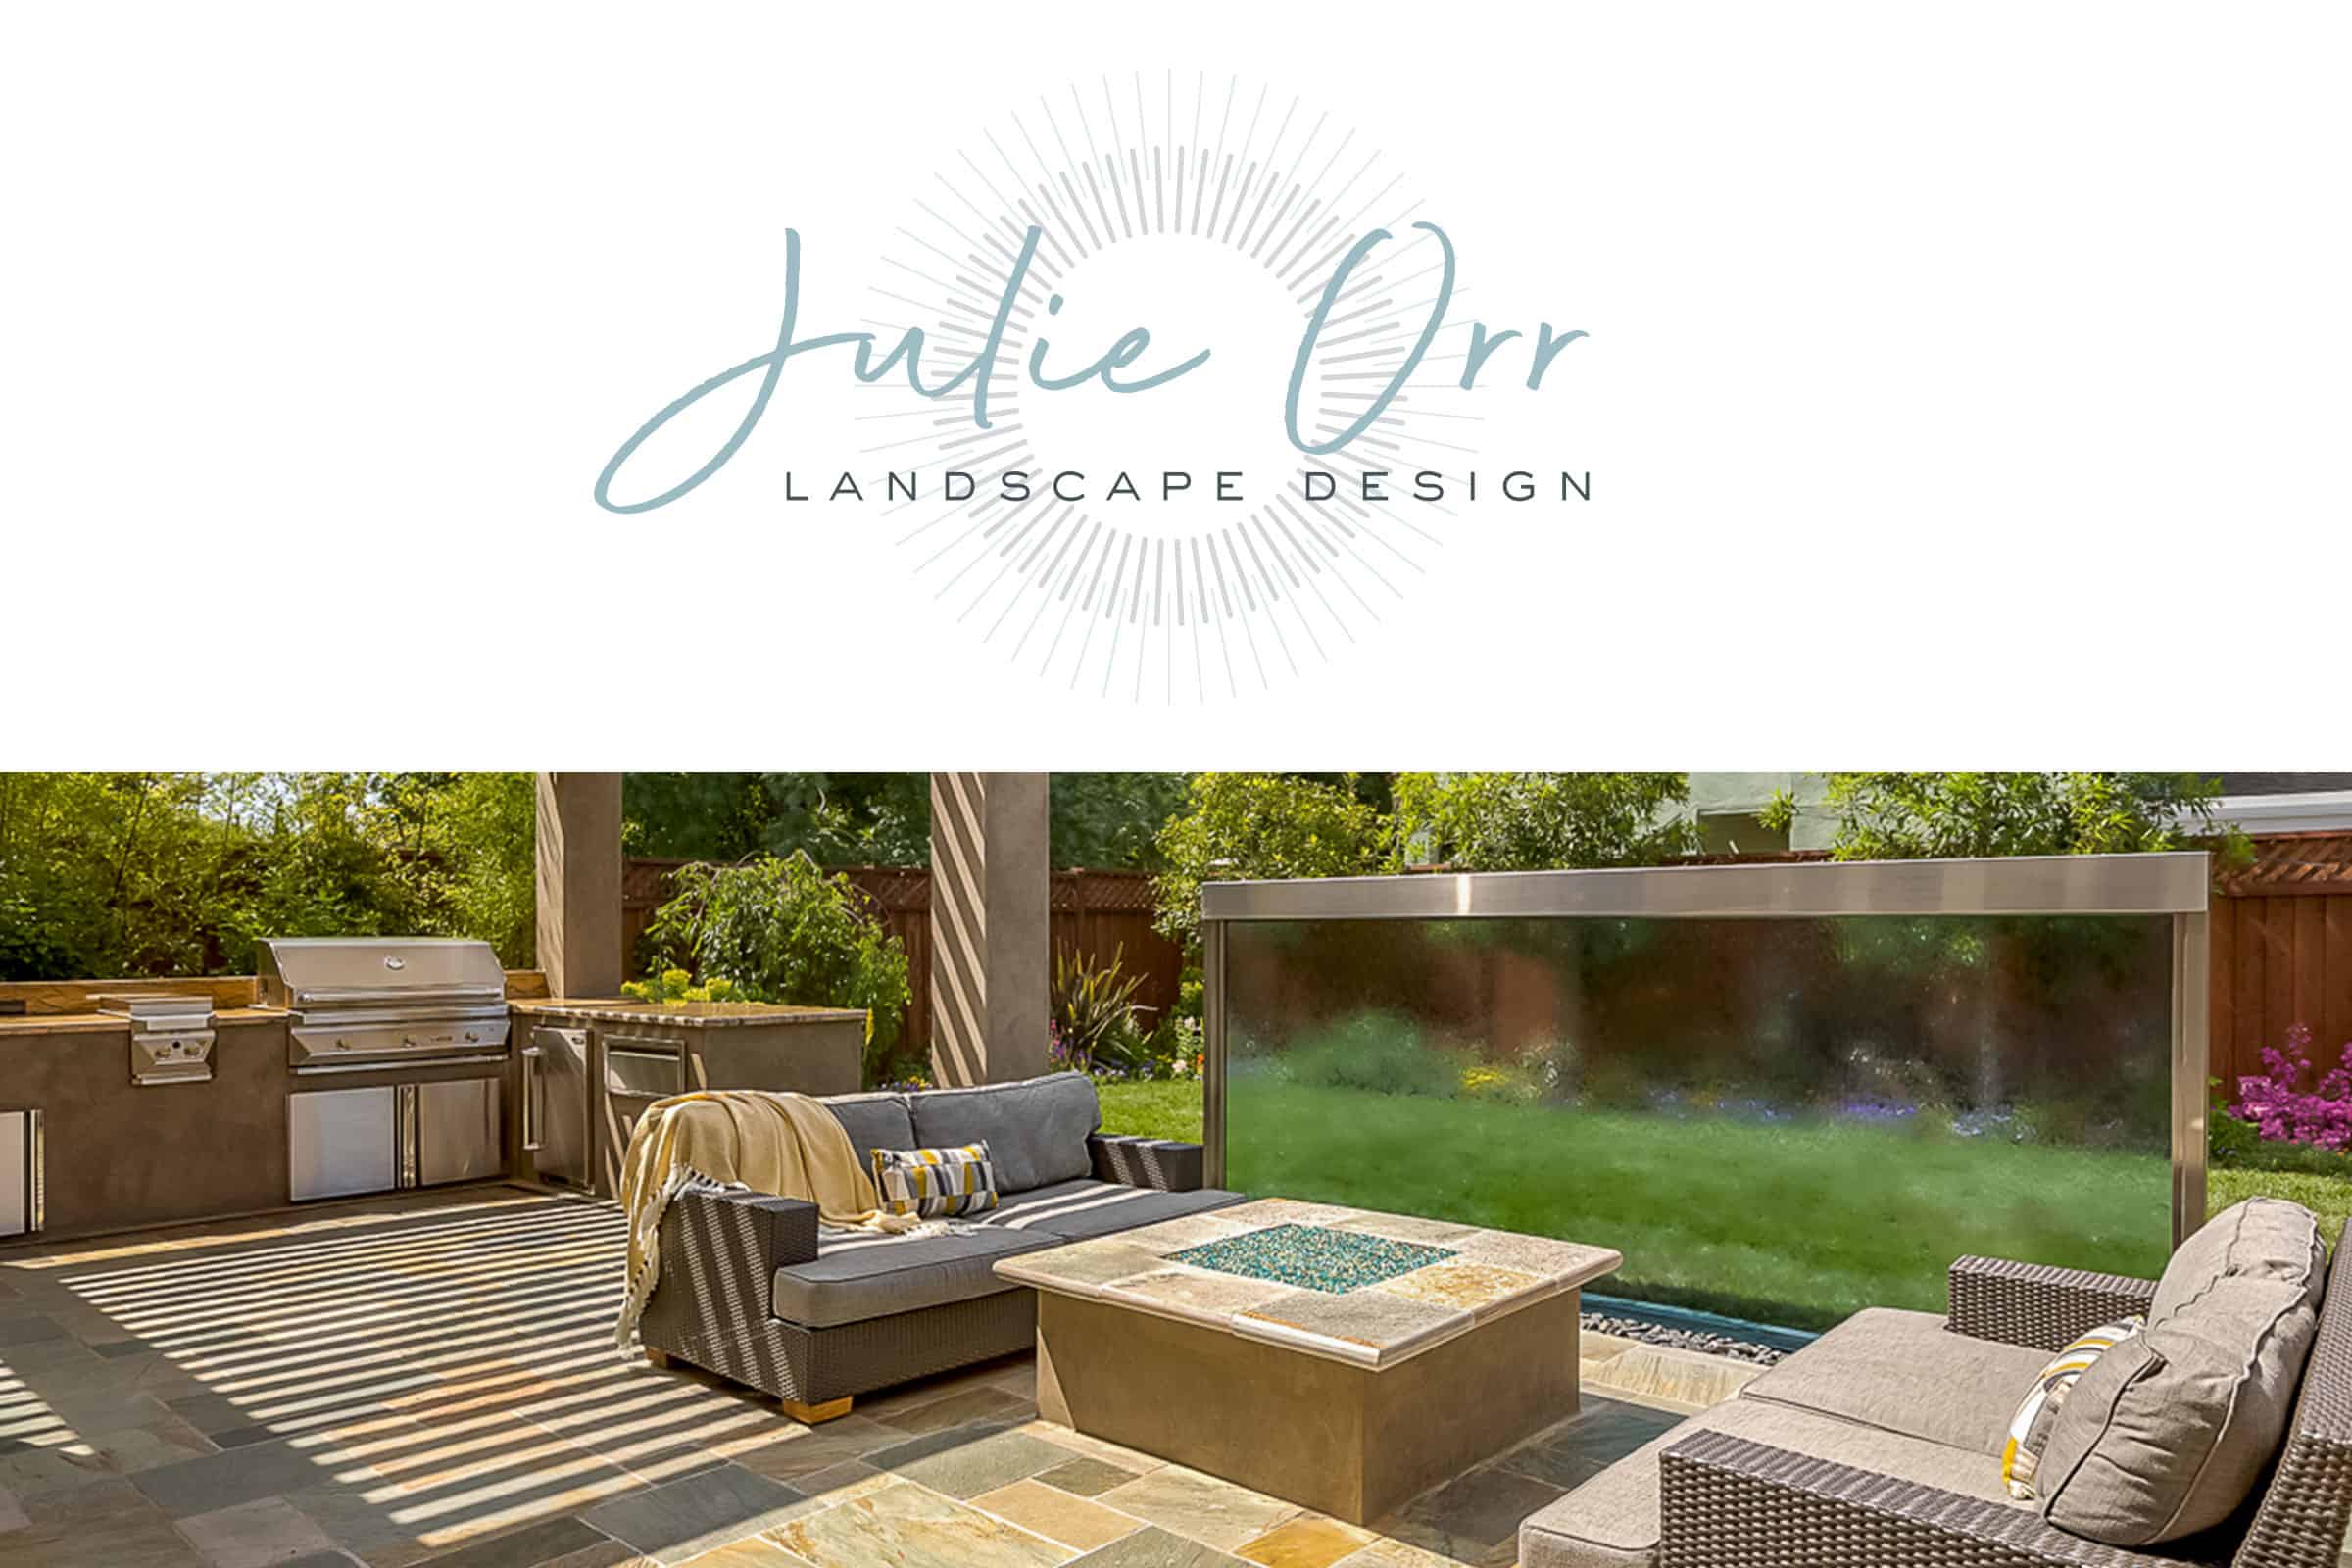 Julie Orr Landscape Design Thumbnail Image